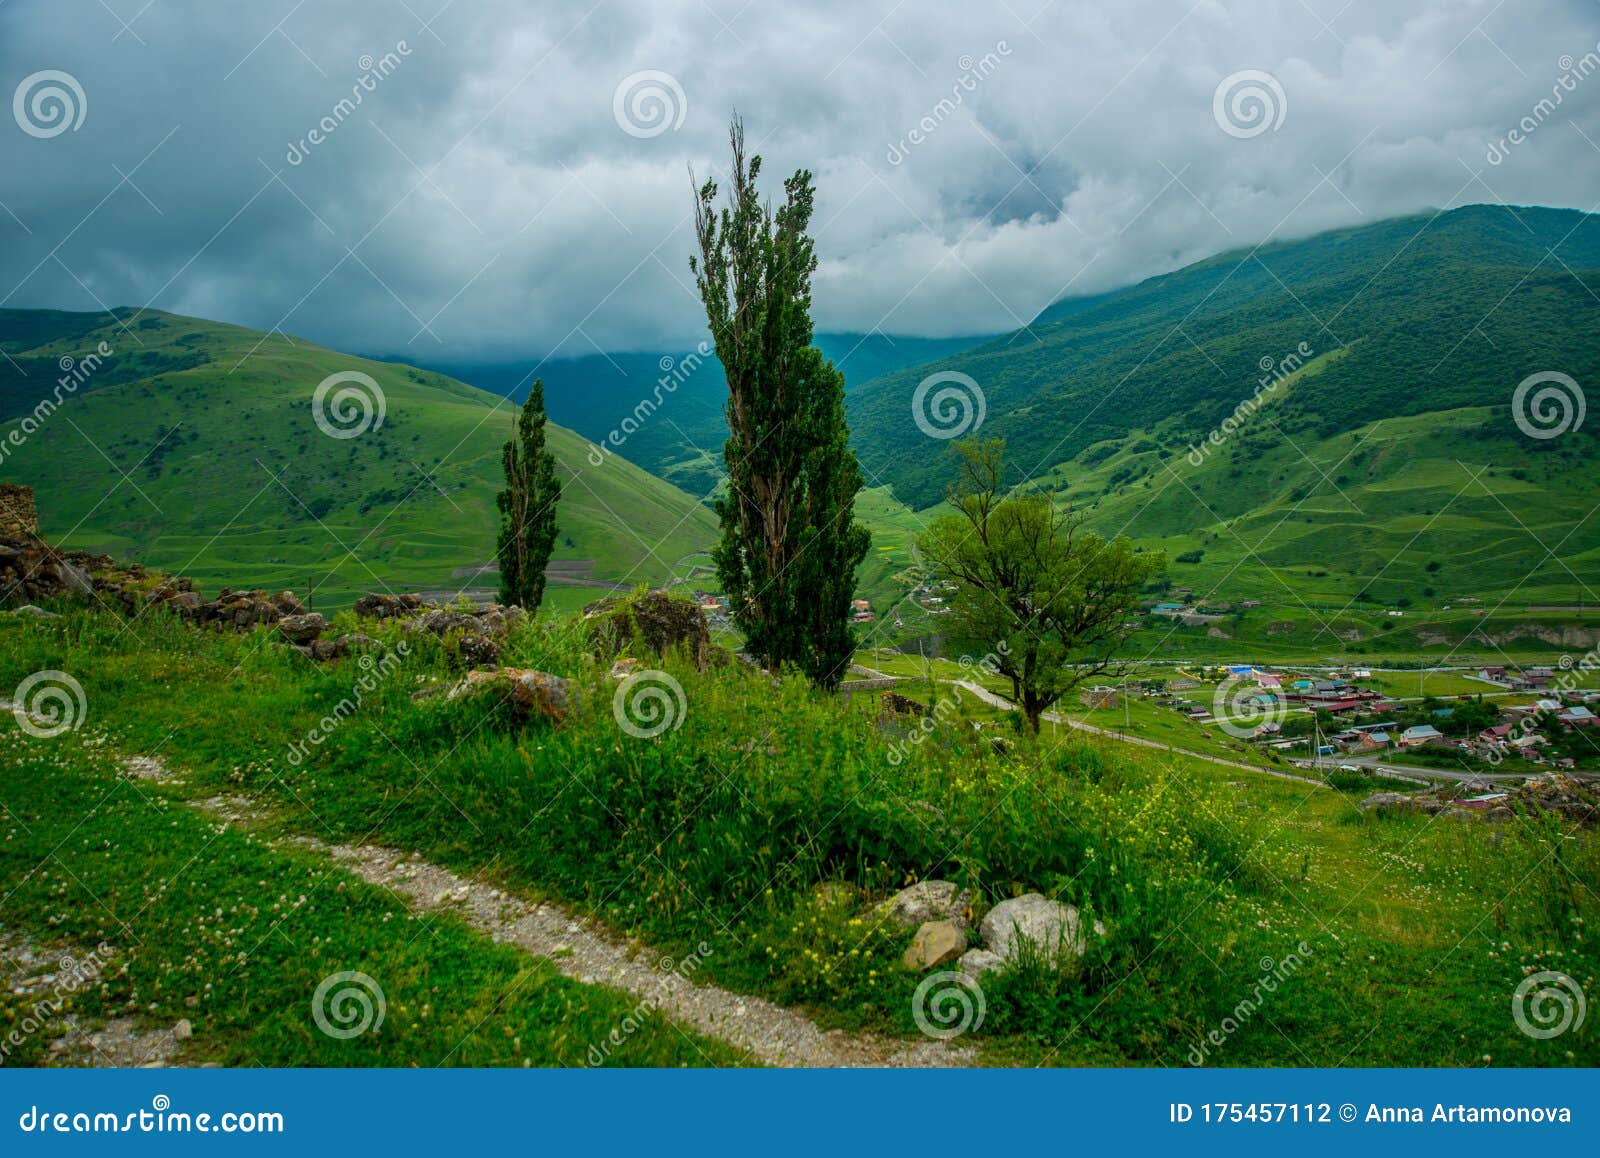 CAUCASUS, NORTH OSSETIA, ALANIA, RUSSIA: beautiful landscape with mountain views near Vladikavkaz